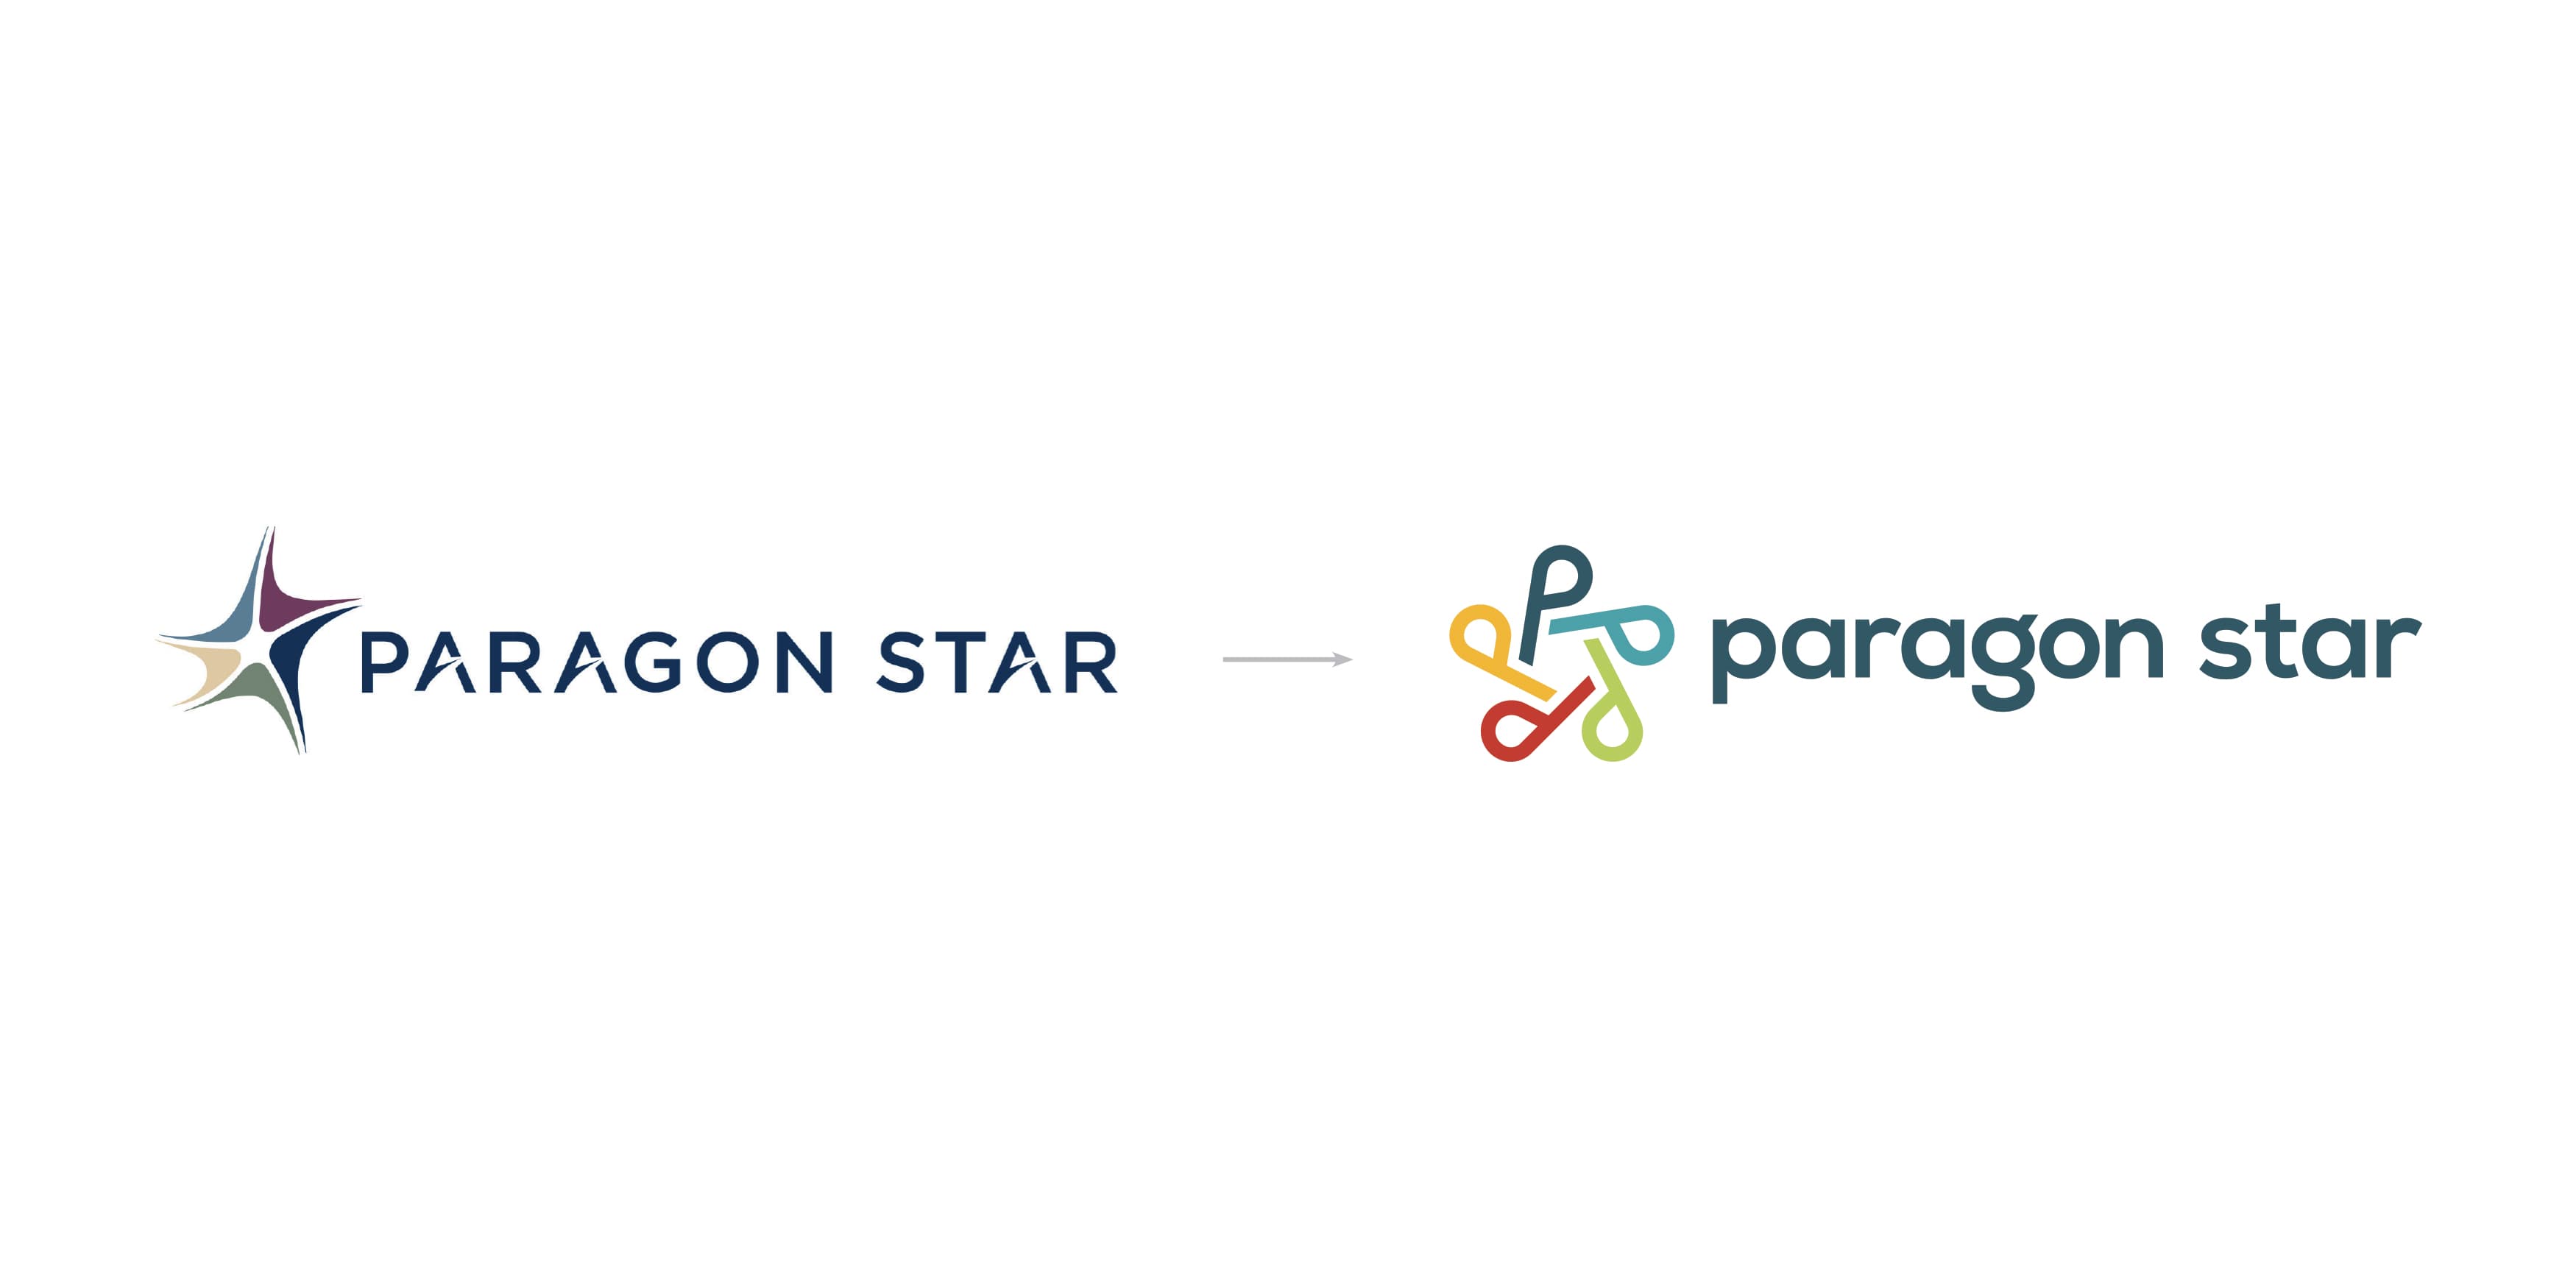 Brand logo transformation for Paragon Star Branding. 